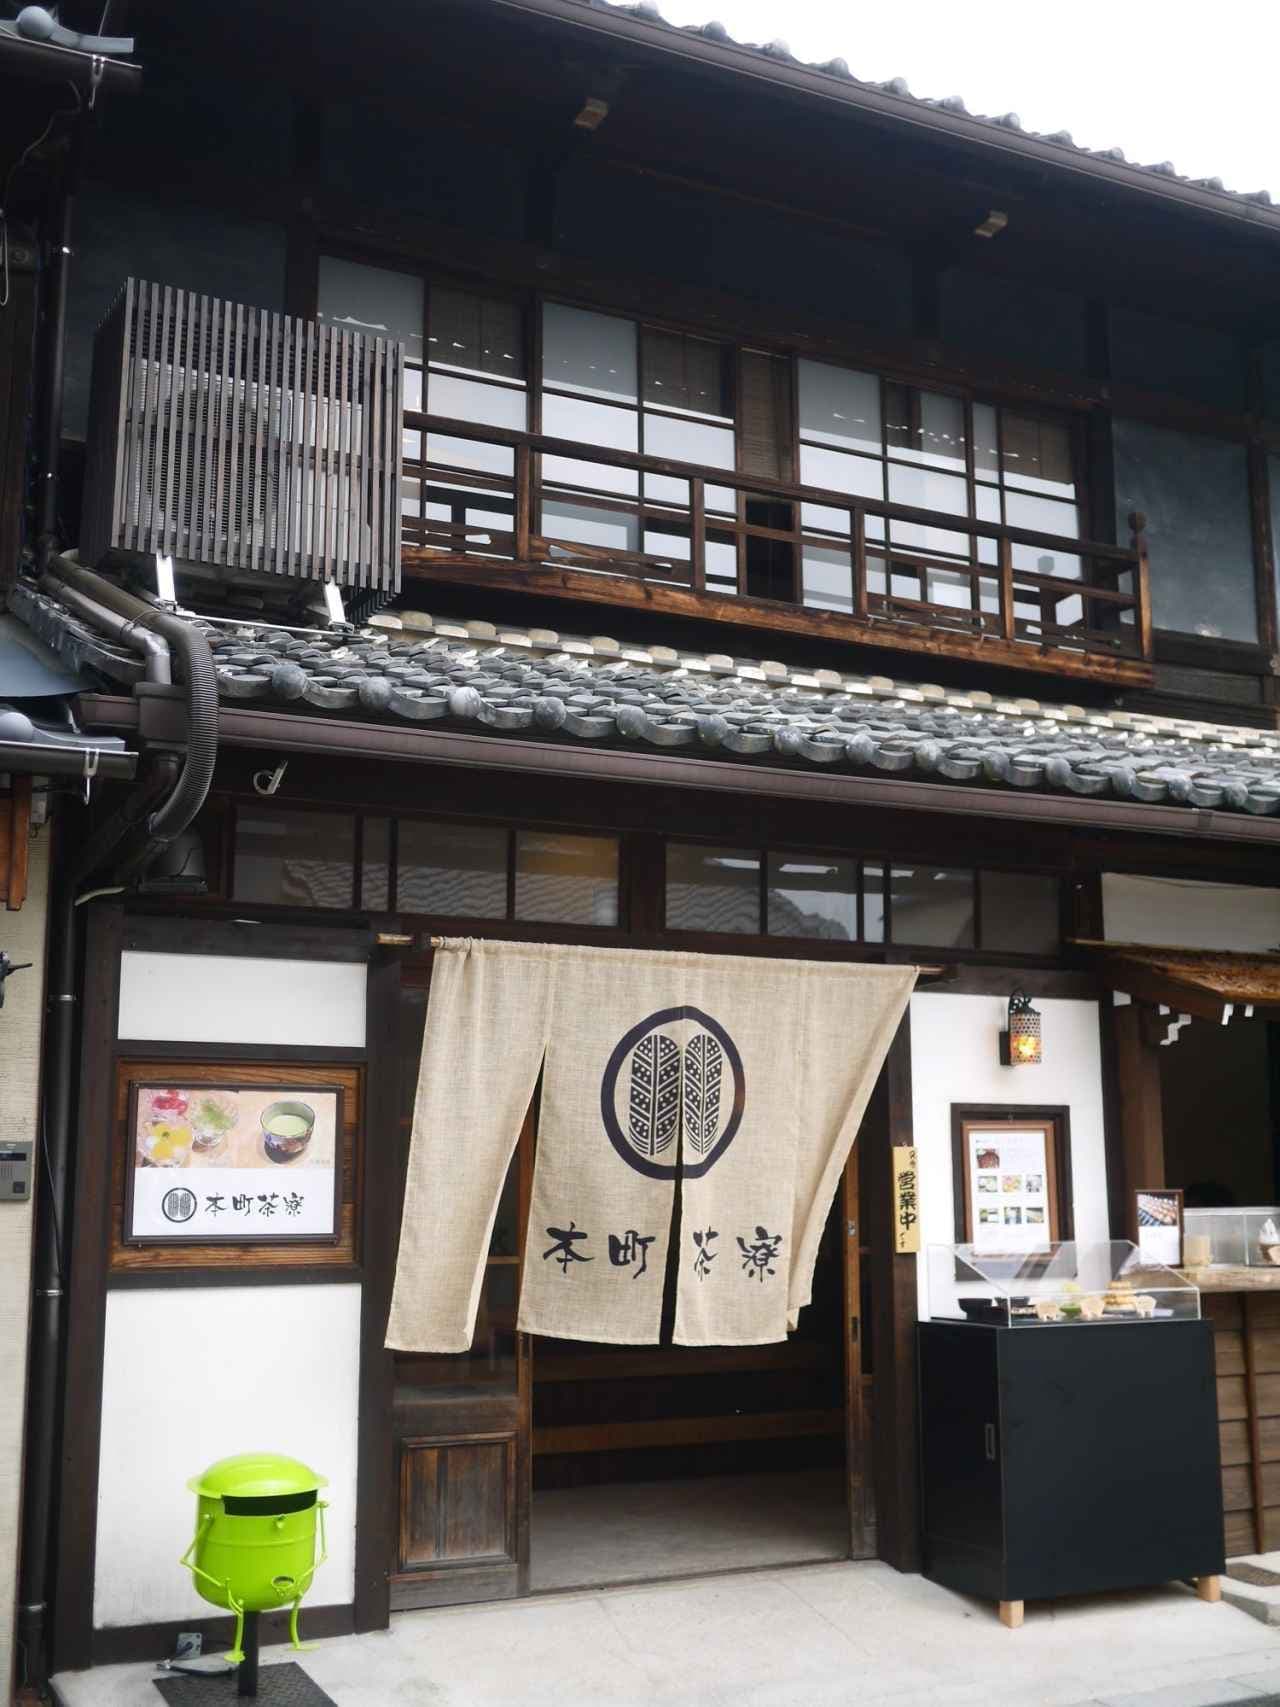 Old folk house cafe "Honmachi Saryo"